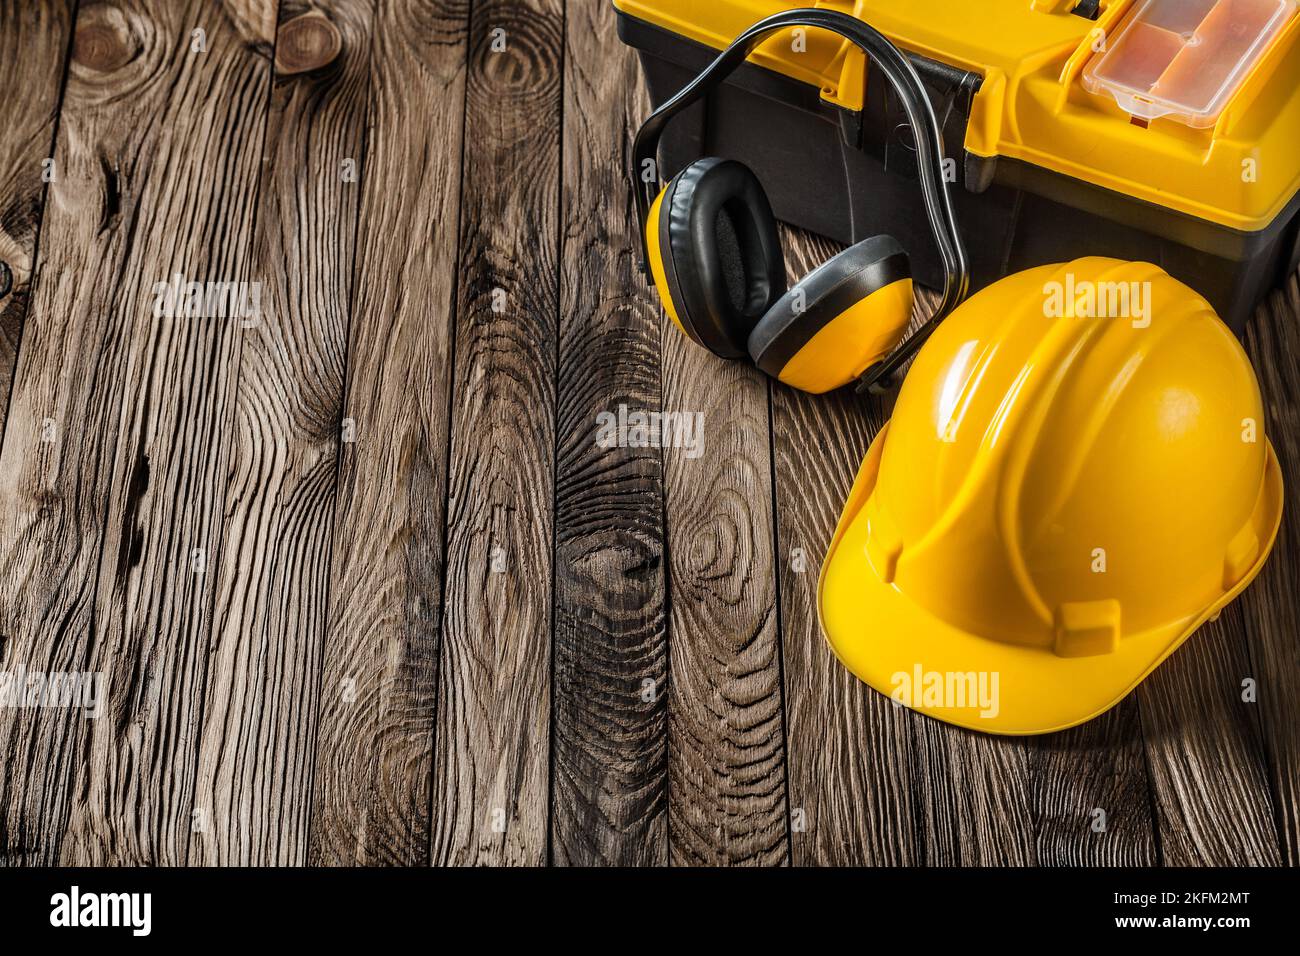 construction tools yellow helmet earphones and toolbox on vintage wood Stock Photo